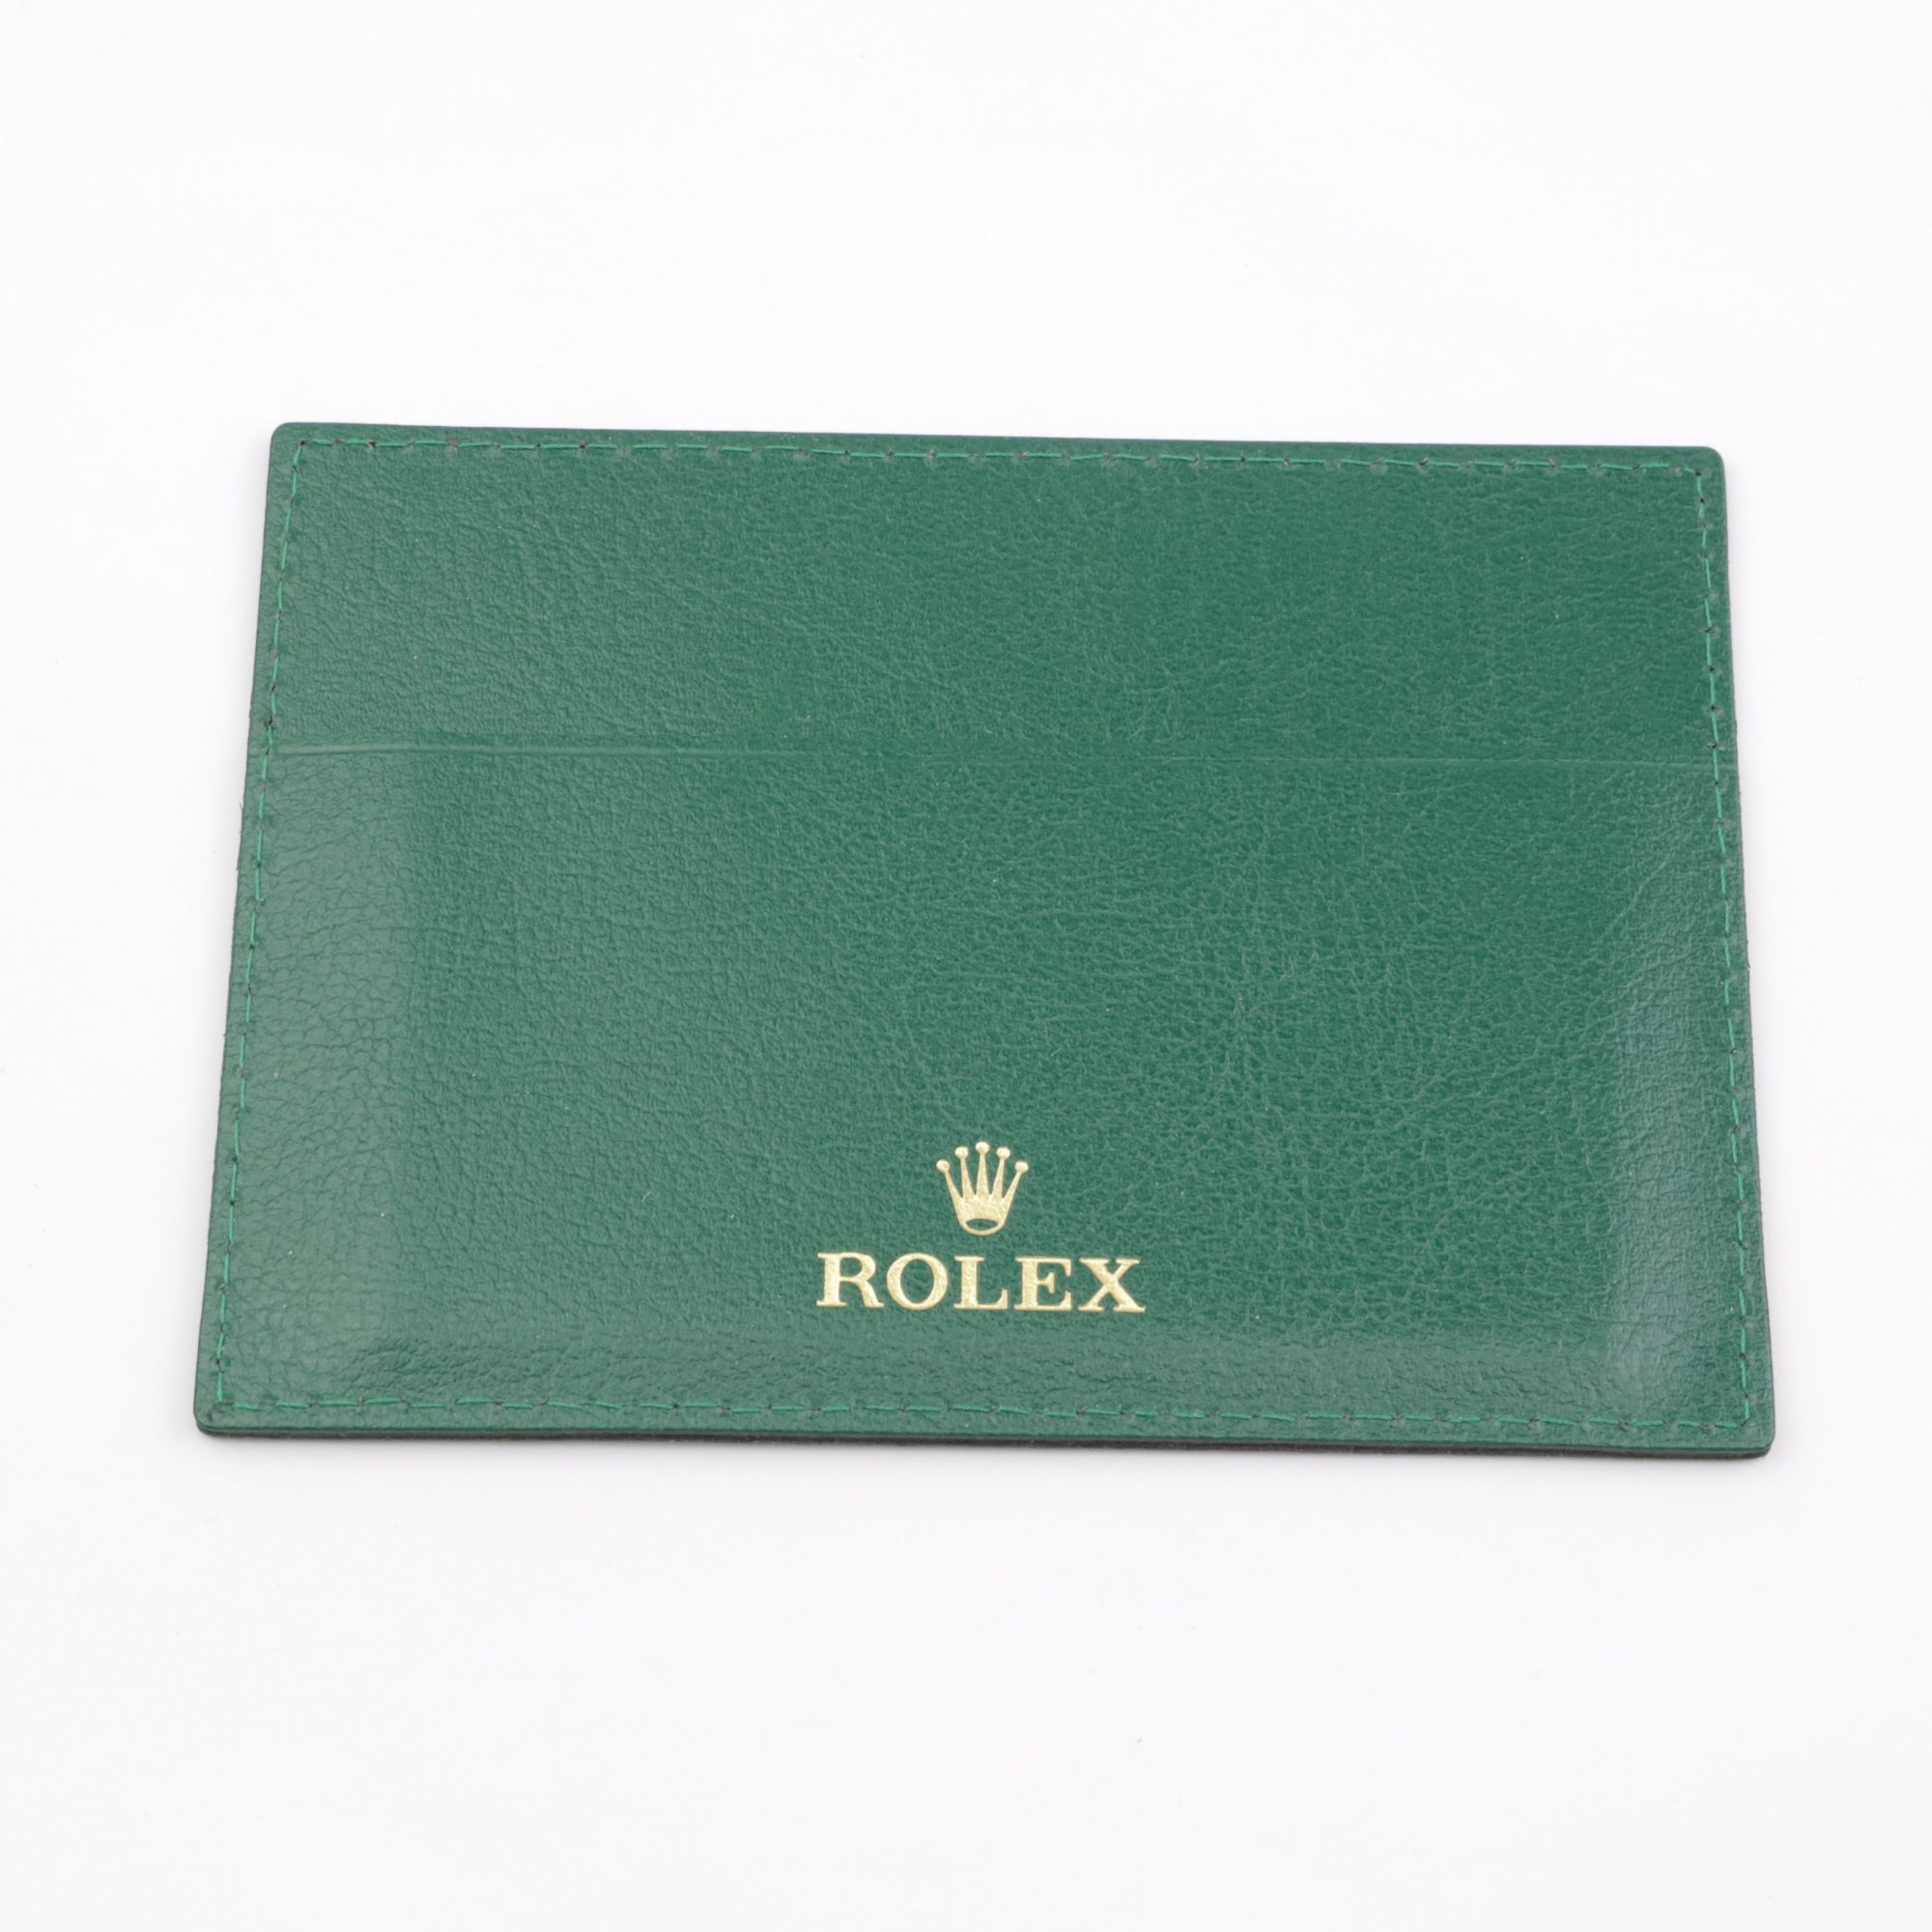 rolex warranty card